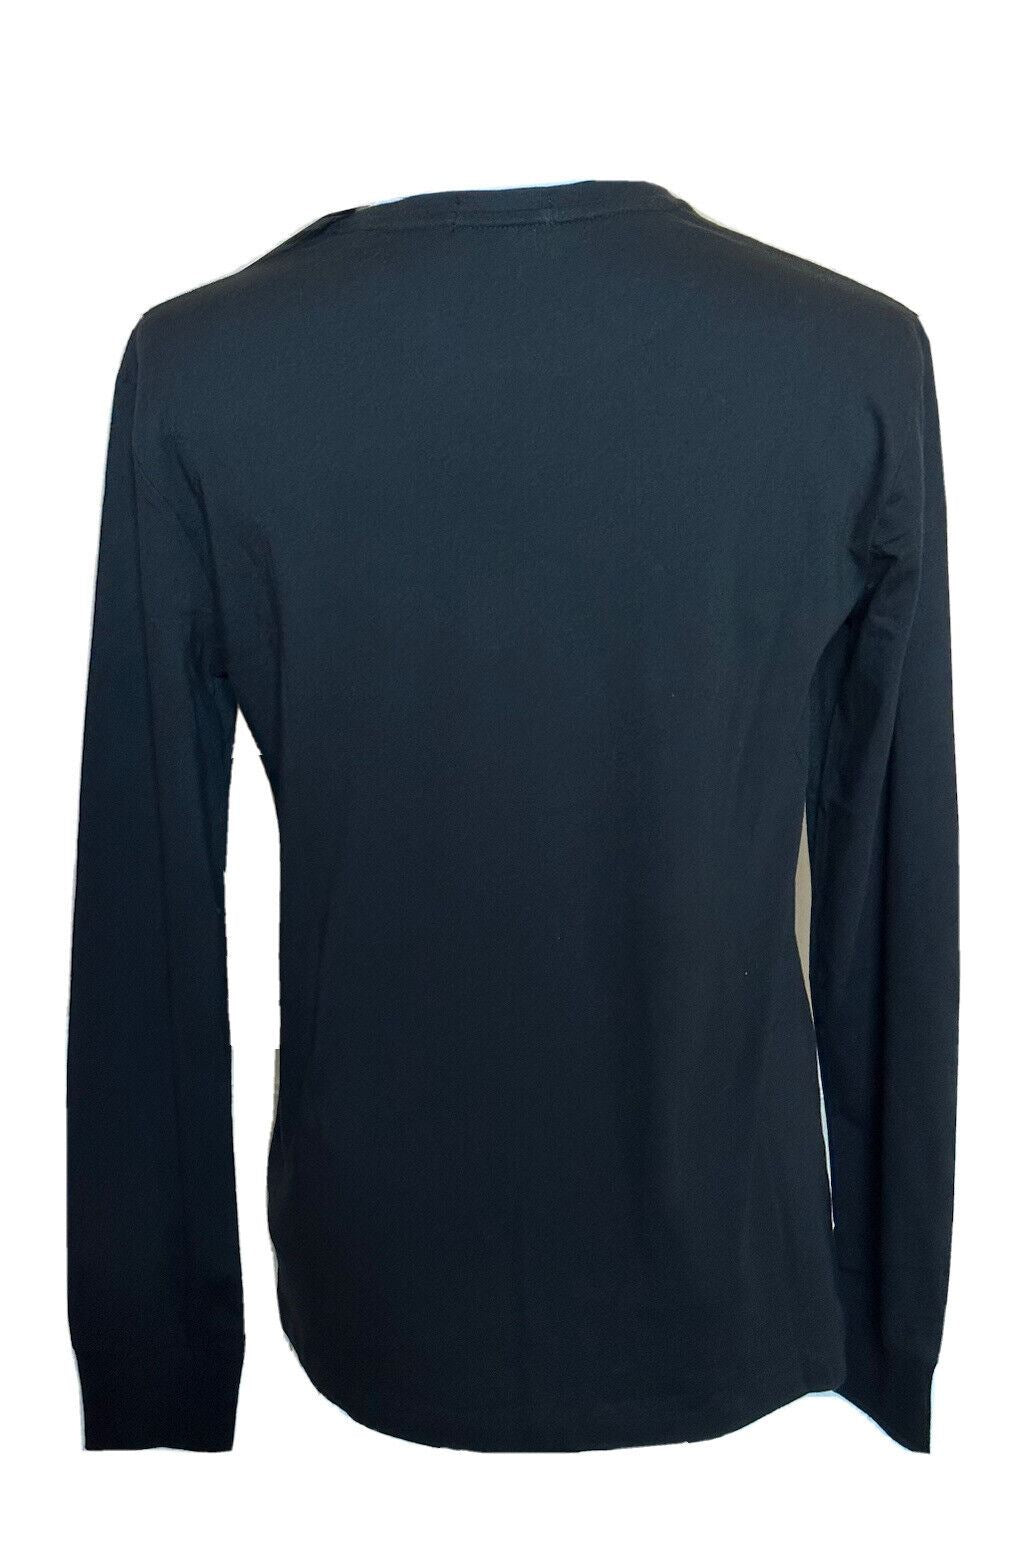 NWT $79.50 Polo Ralph Lauren Long Sleeve Bear T-Shirt Black 2XL